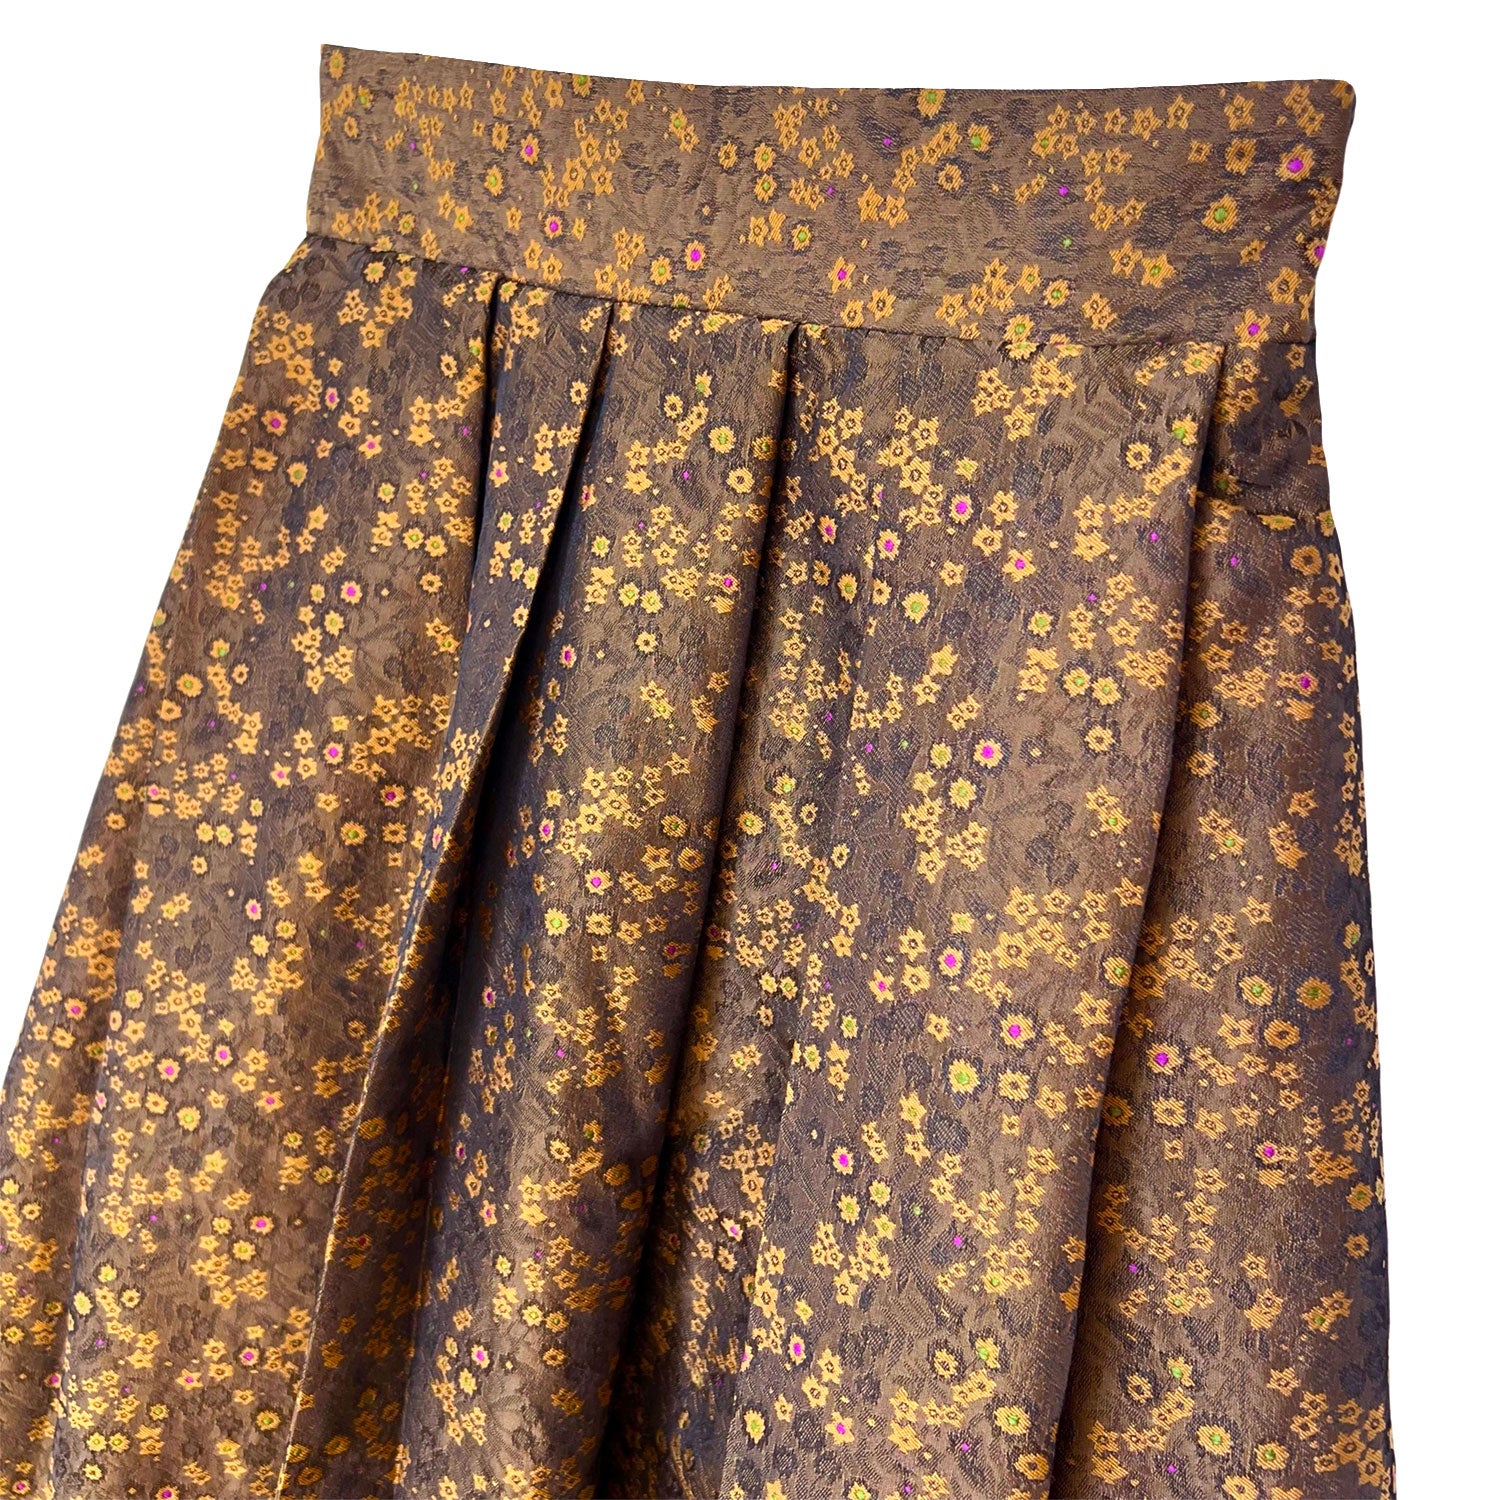 Floral Brocade Midi Skirt in Caramel Brown